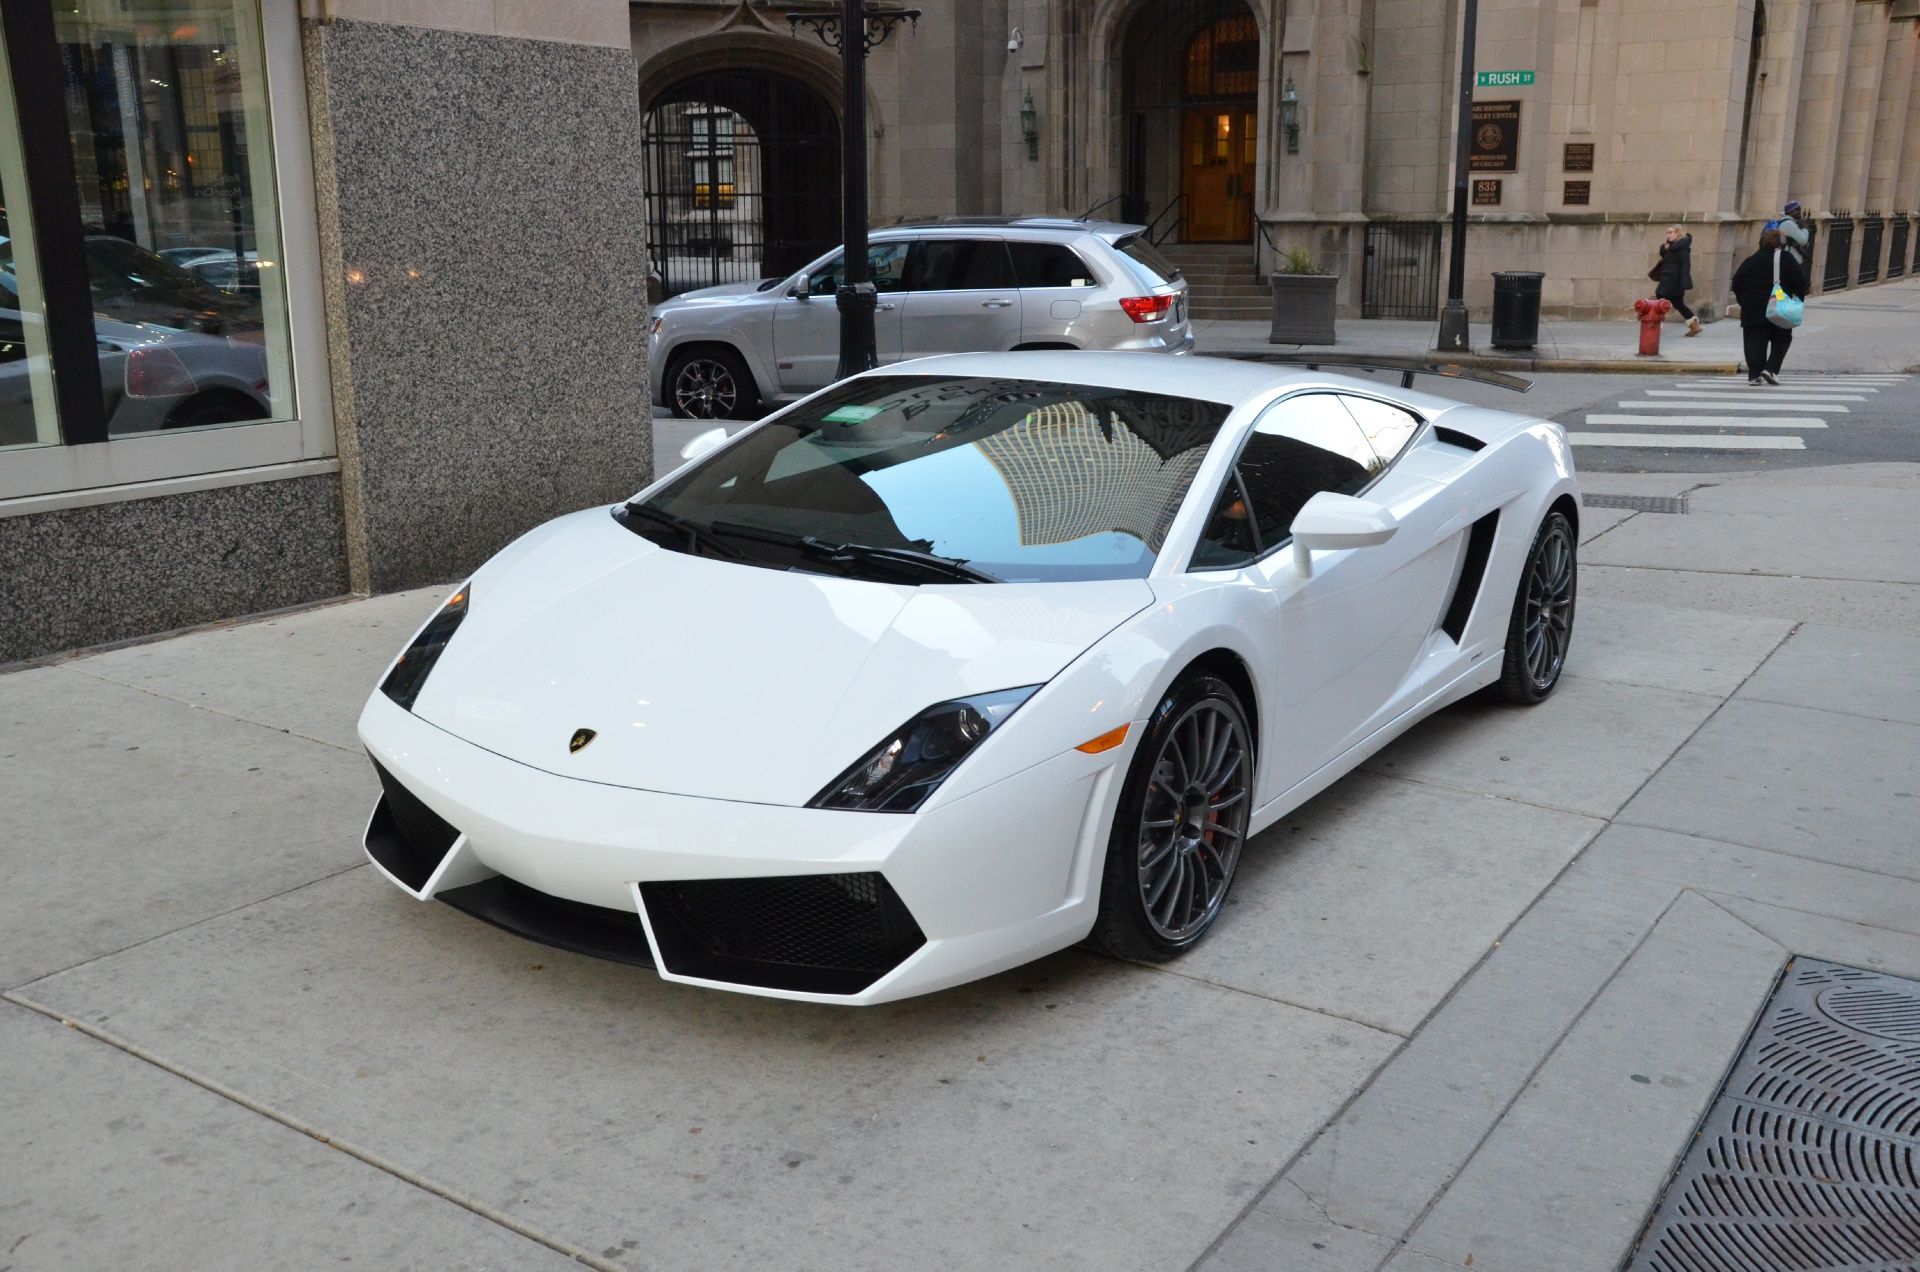 the 2014 Lamborghini Gallardo parked outside a store